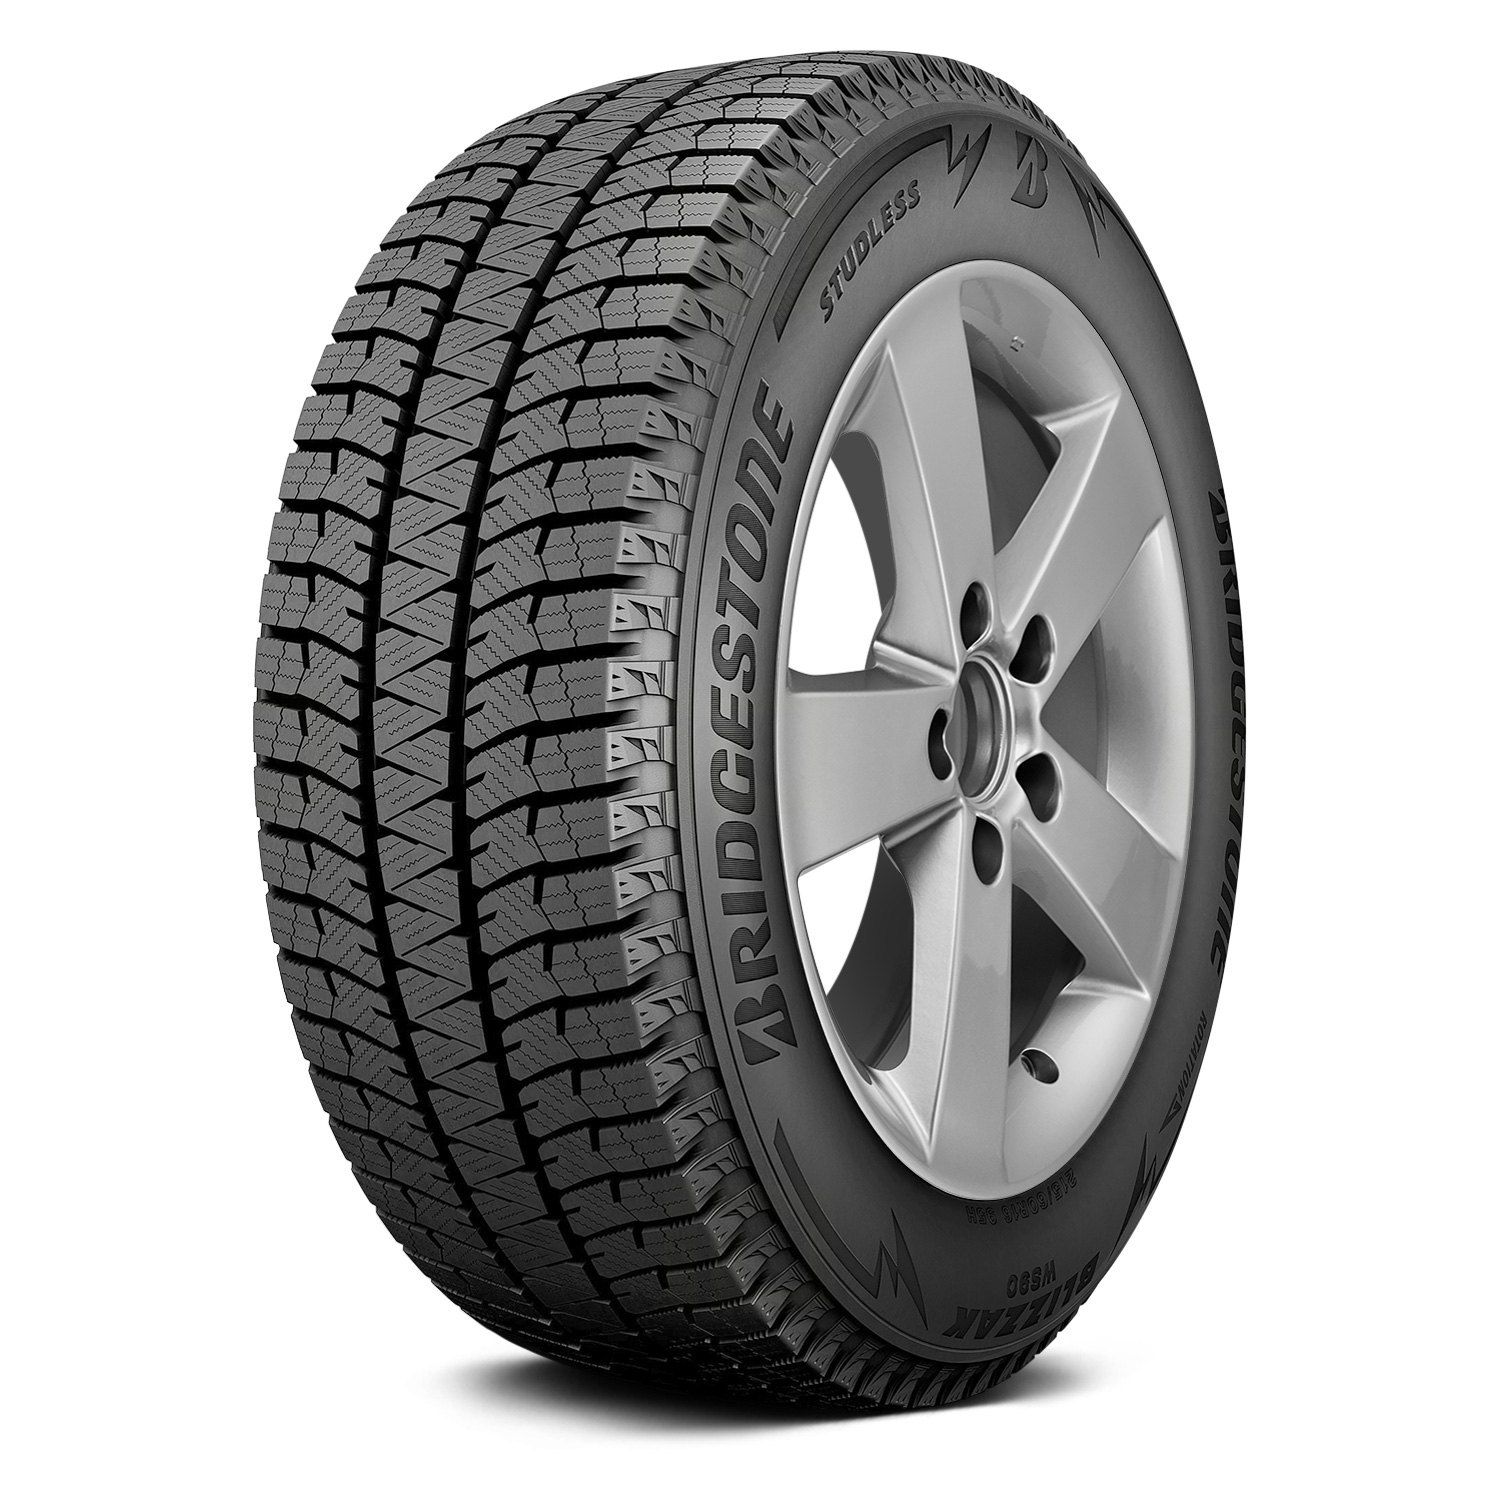 Bridgestone Blizzak WS90 Winter/Snow Passenger Tire 205/65R15 94 T 